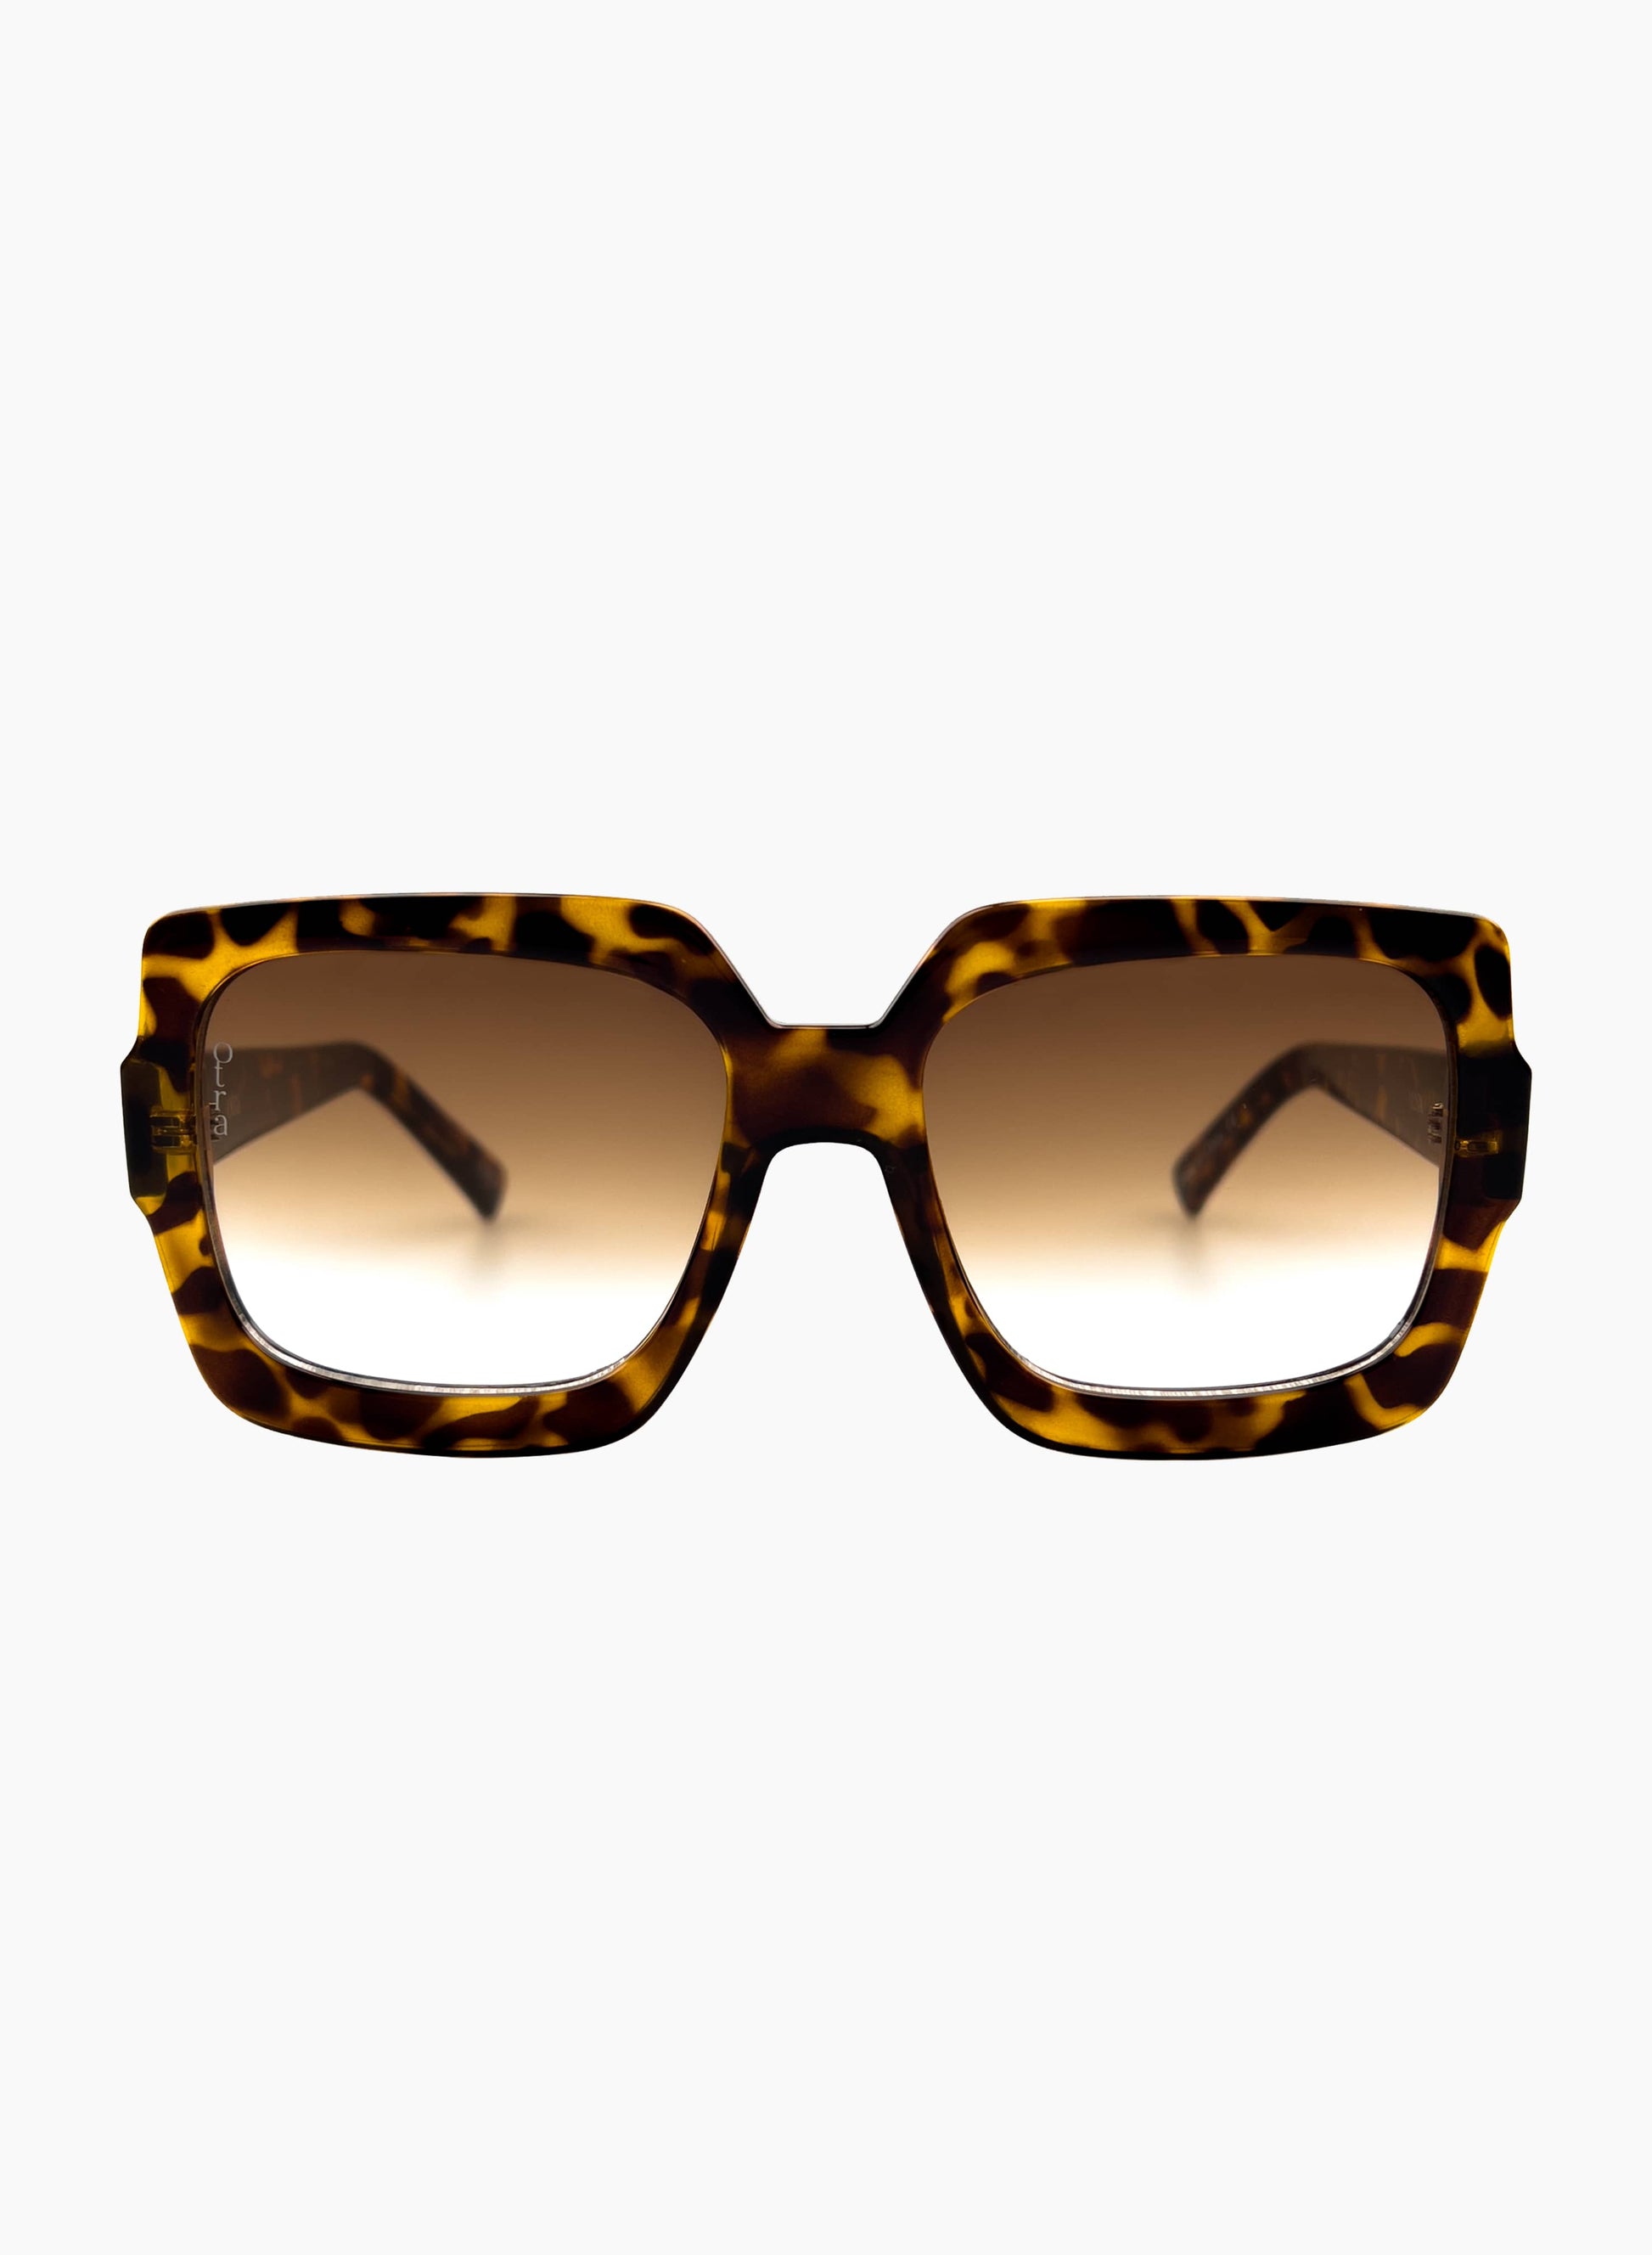 Luna oversized mod style sunglasses in tortoiseshell